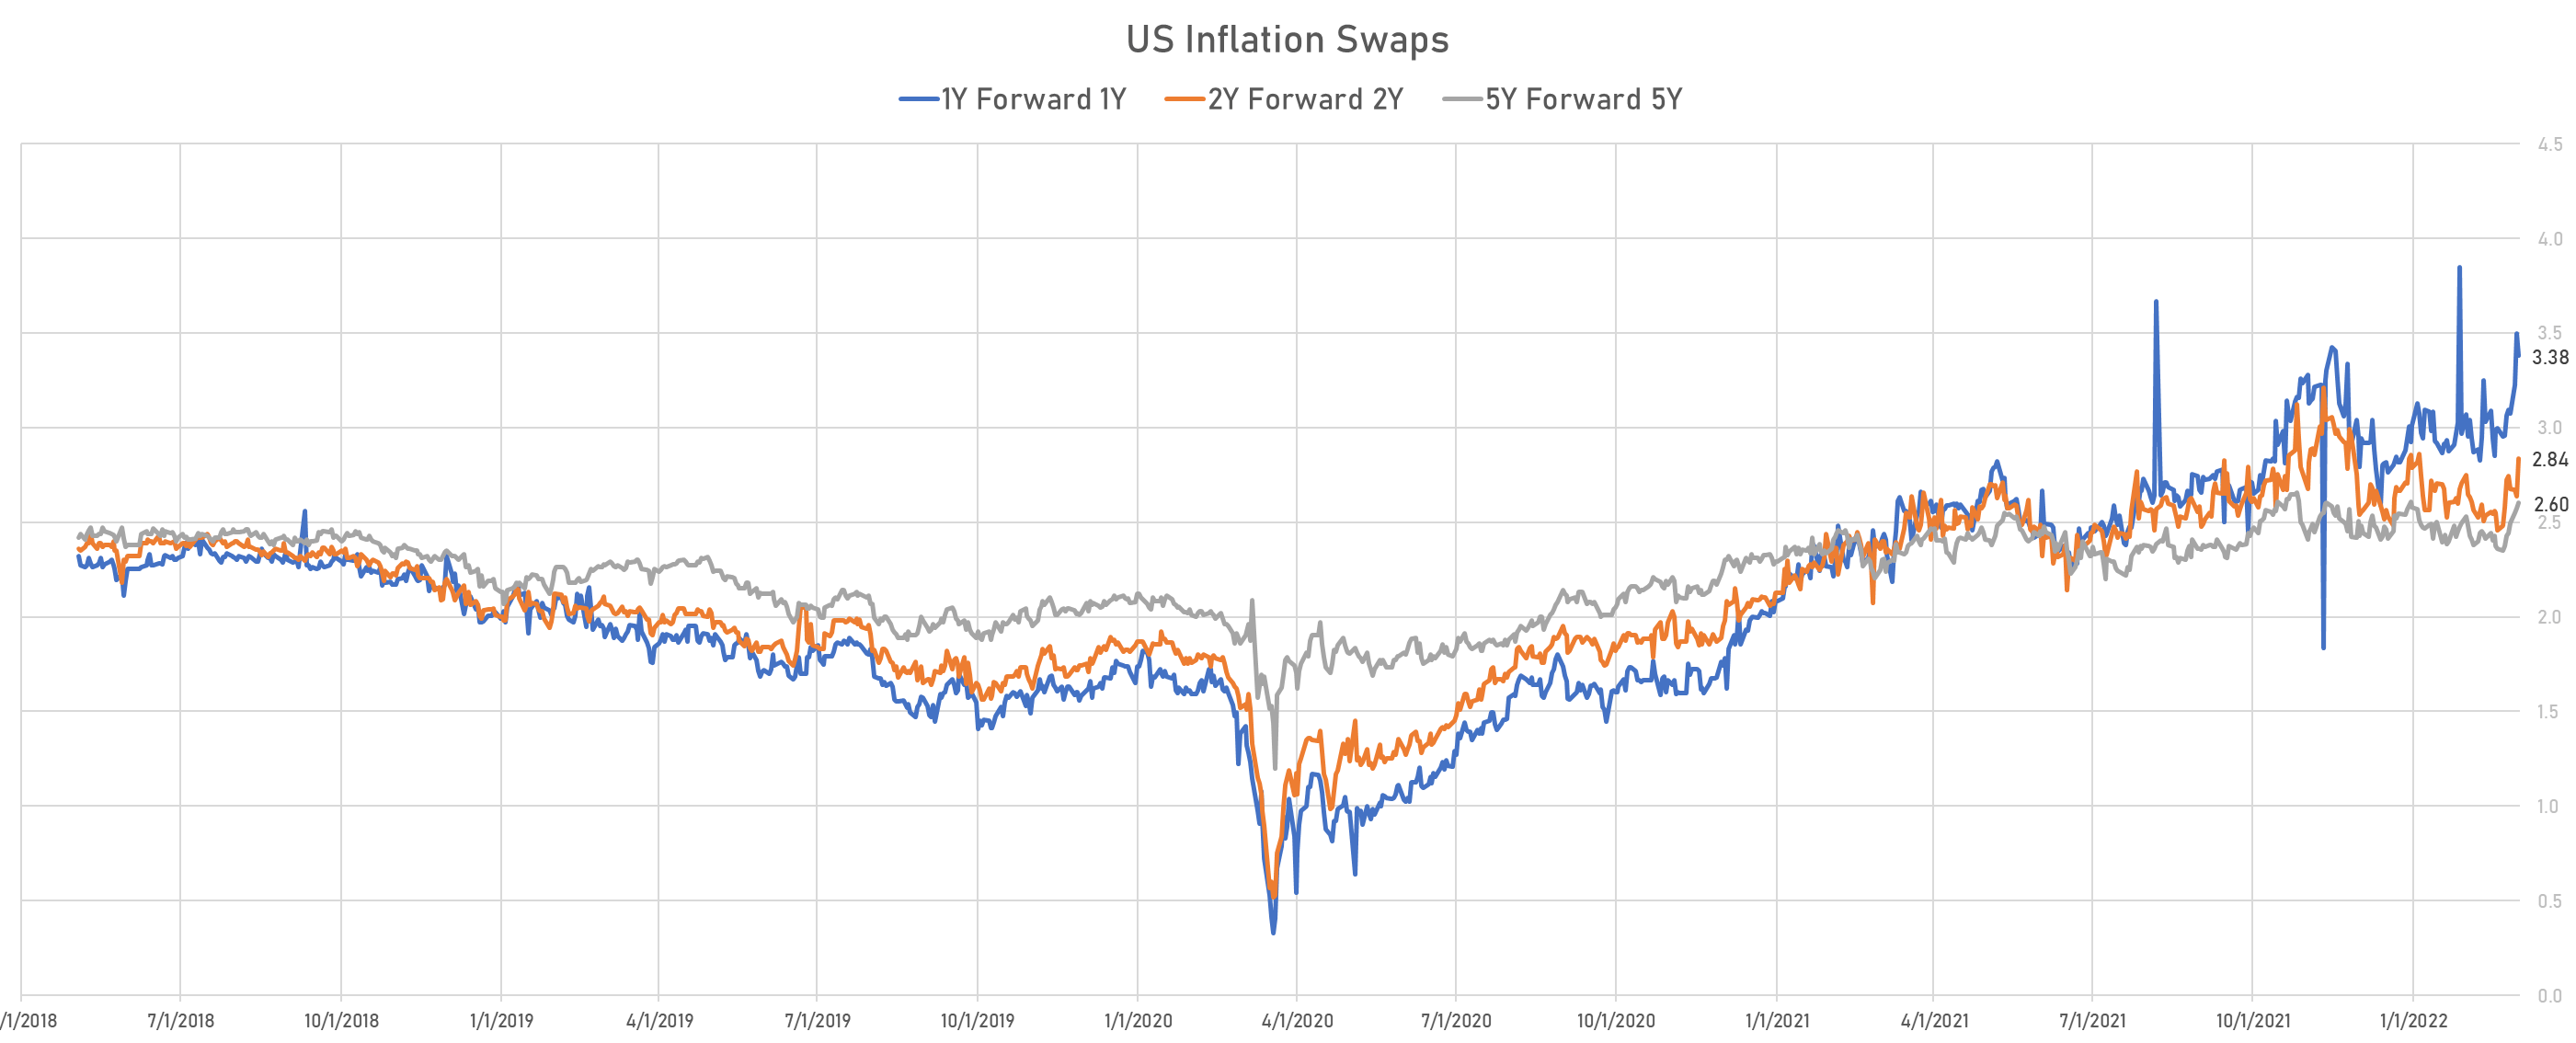 Forward Starting Inflation Swaps | Sources: phipost.com, Refinitiv data